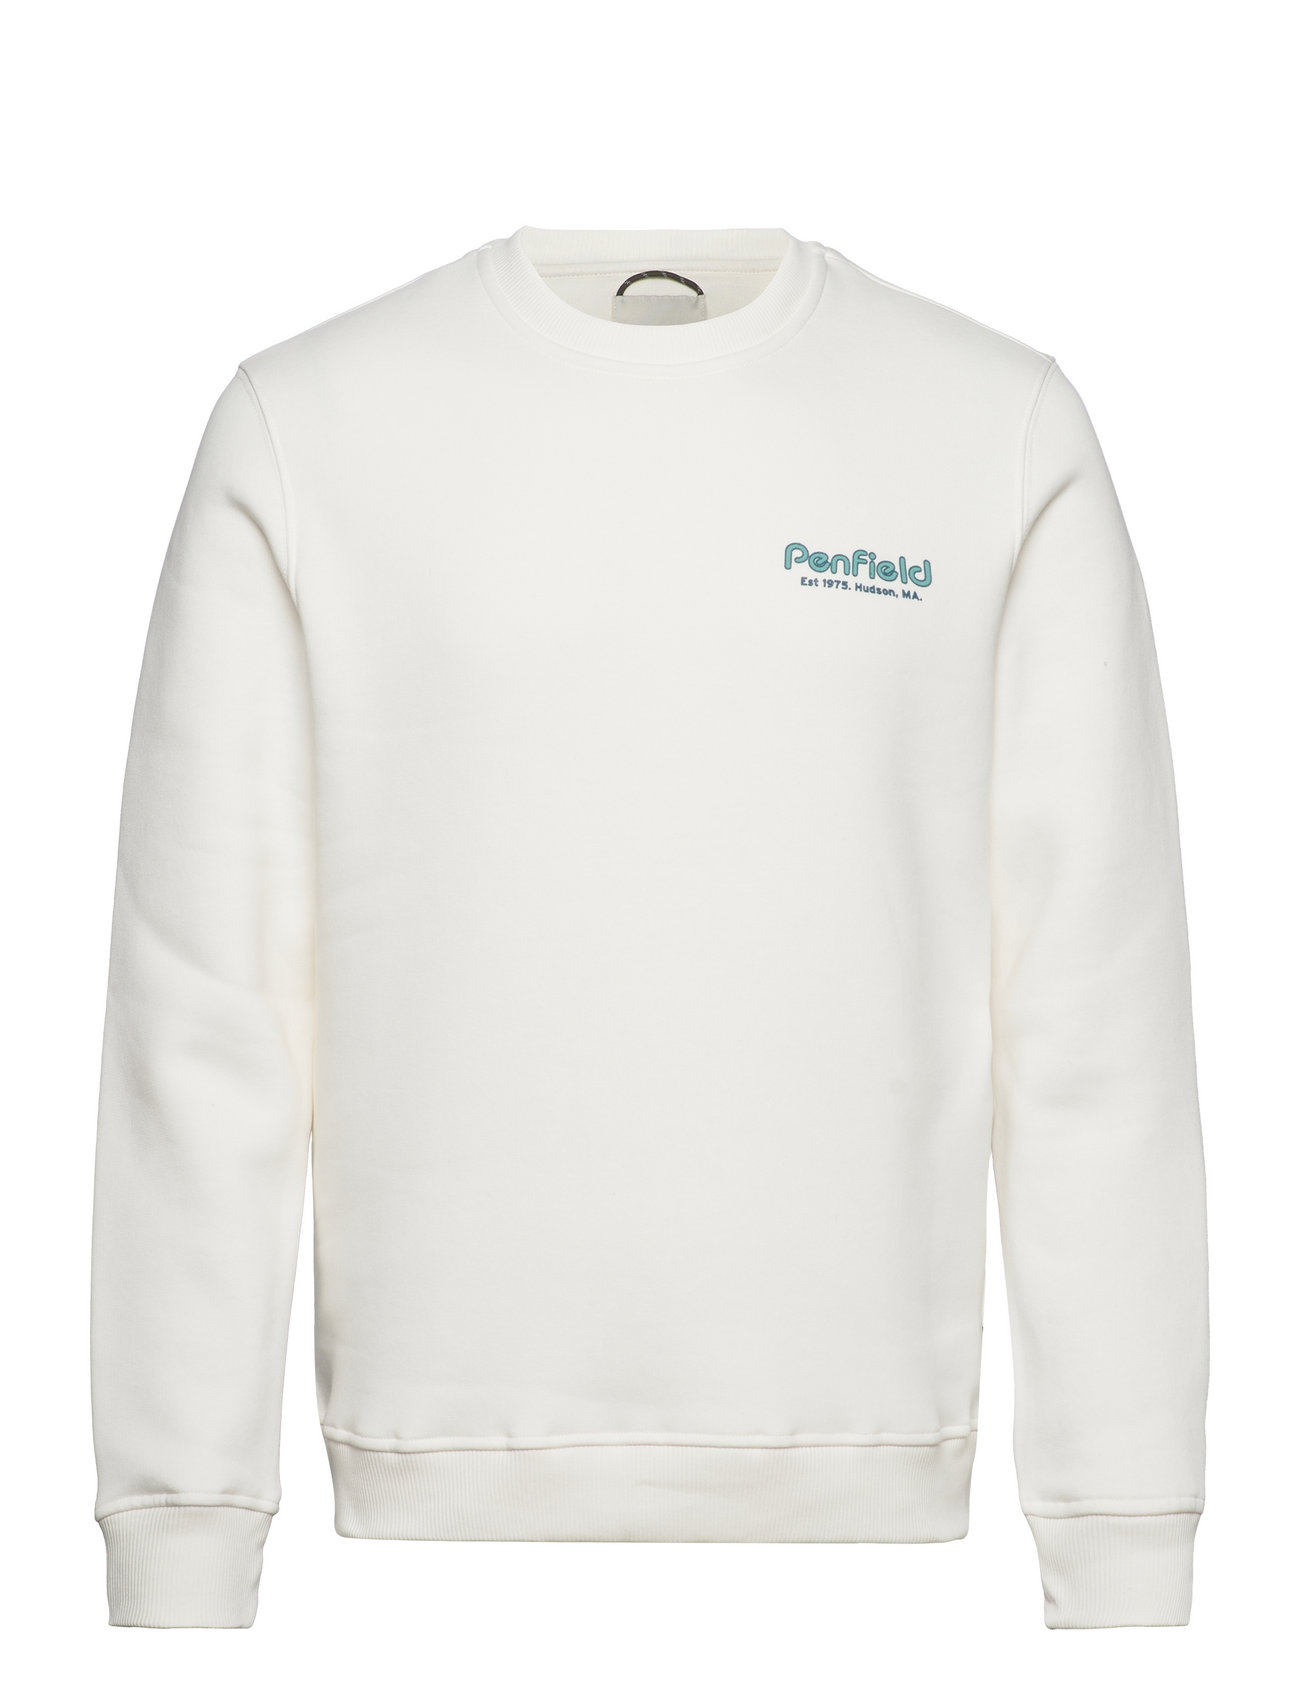 Penfield Sunset Mountain Back Graphic Crew Neck Sweat Tops Sweatshirts & Hoodies Sweatshirts White Penfield